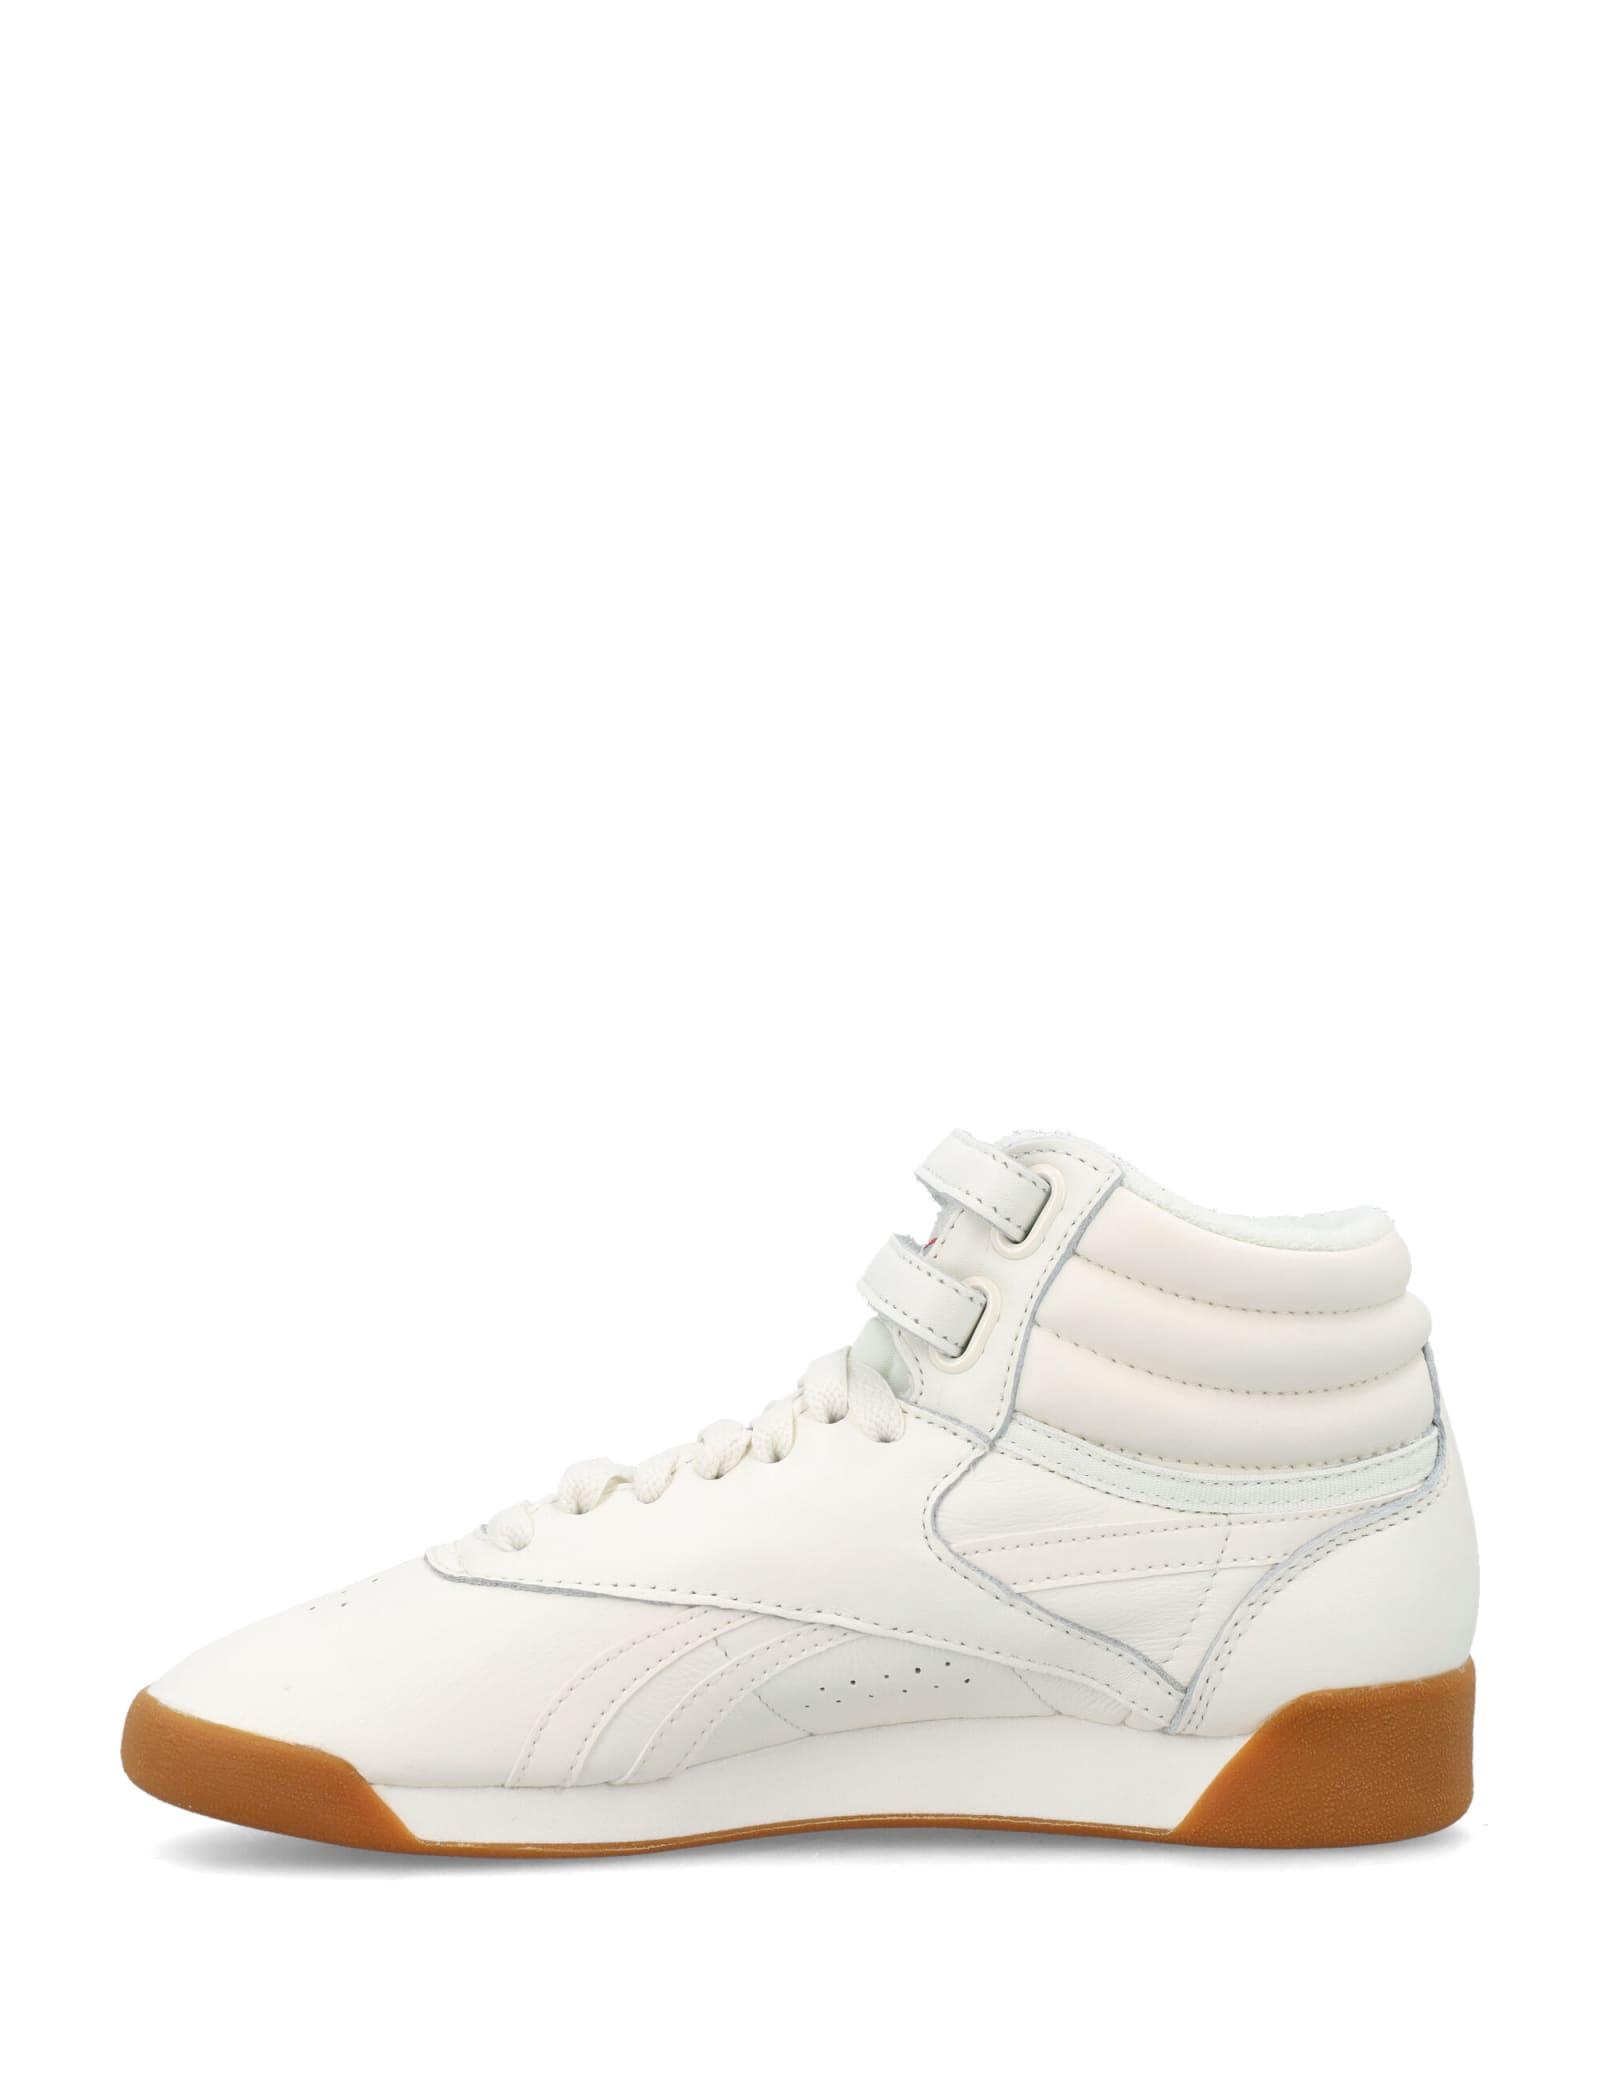 Reebok F/s Hi Shoes in White | Lyst